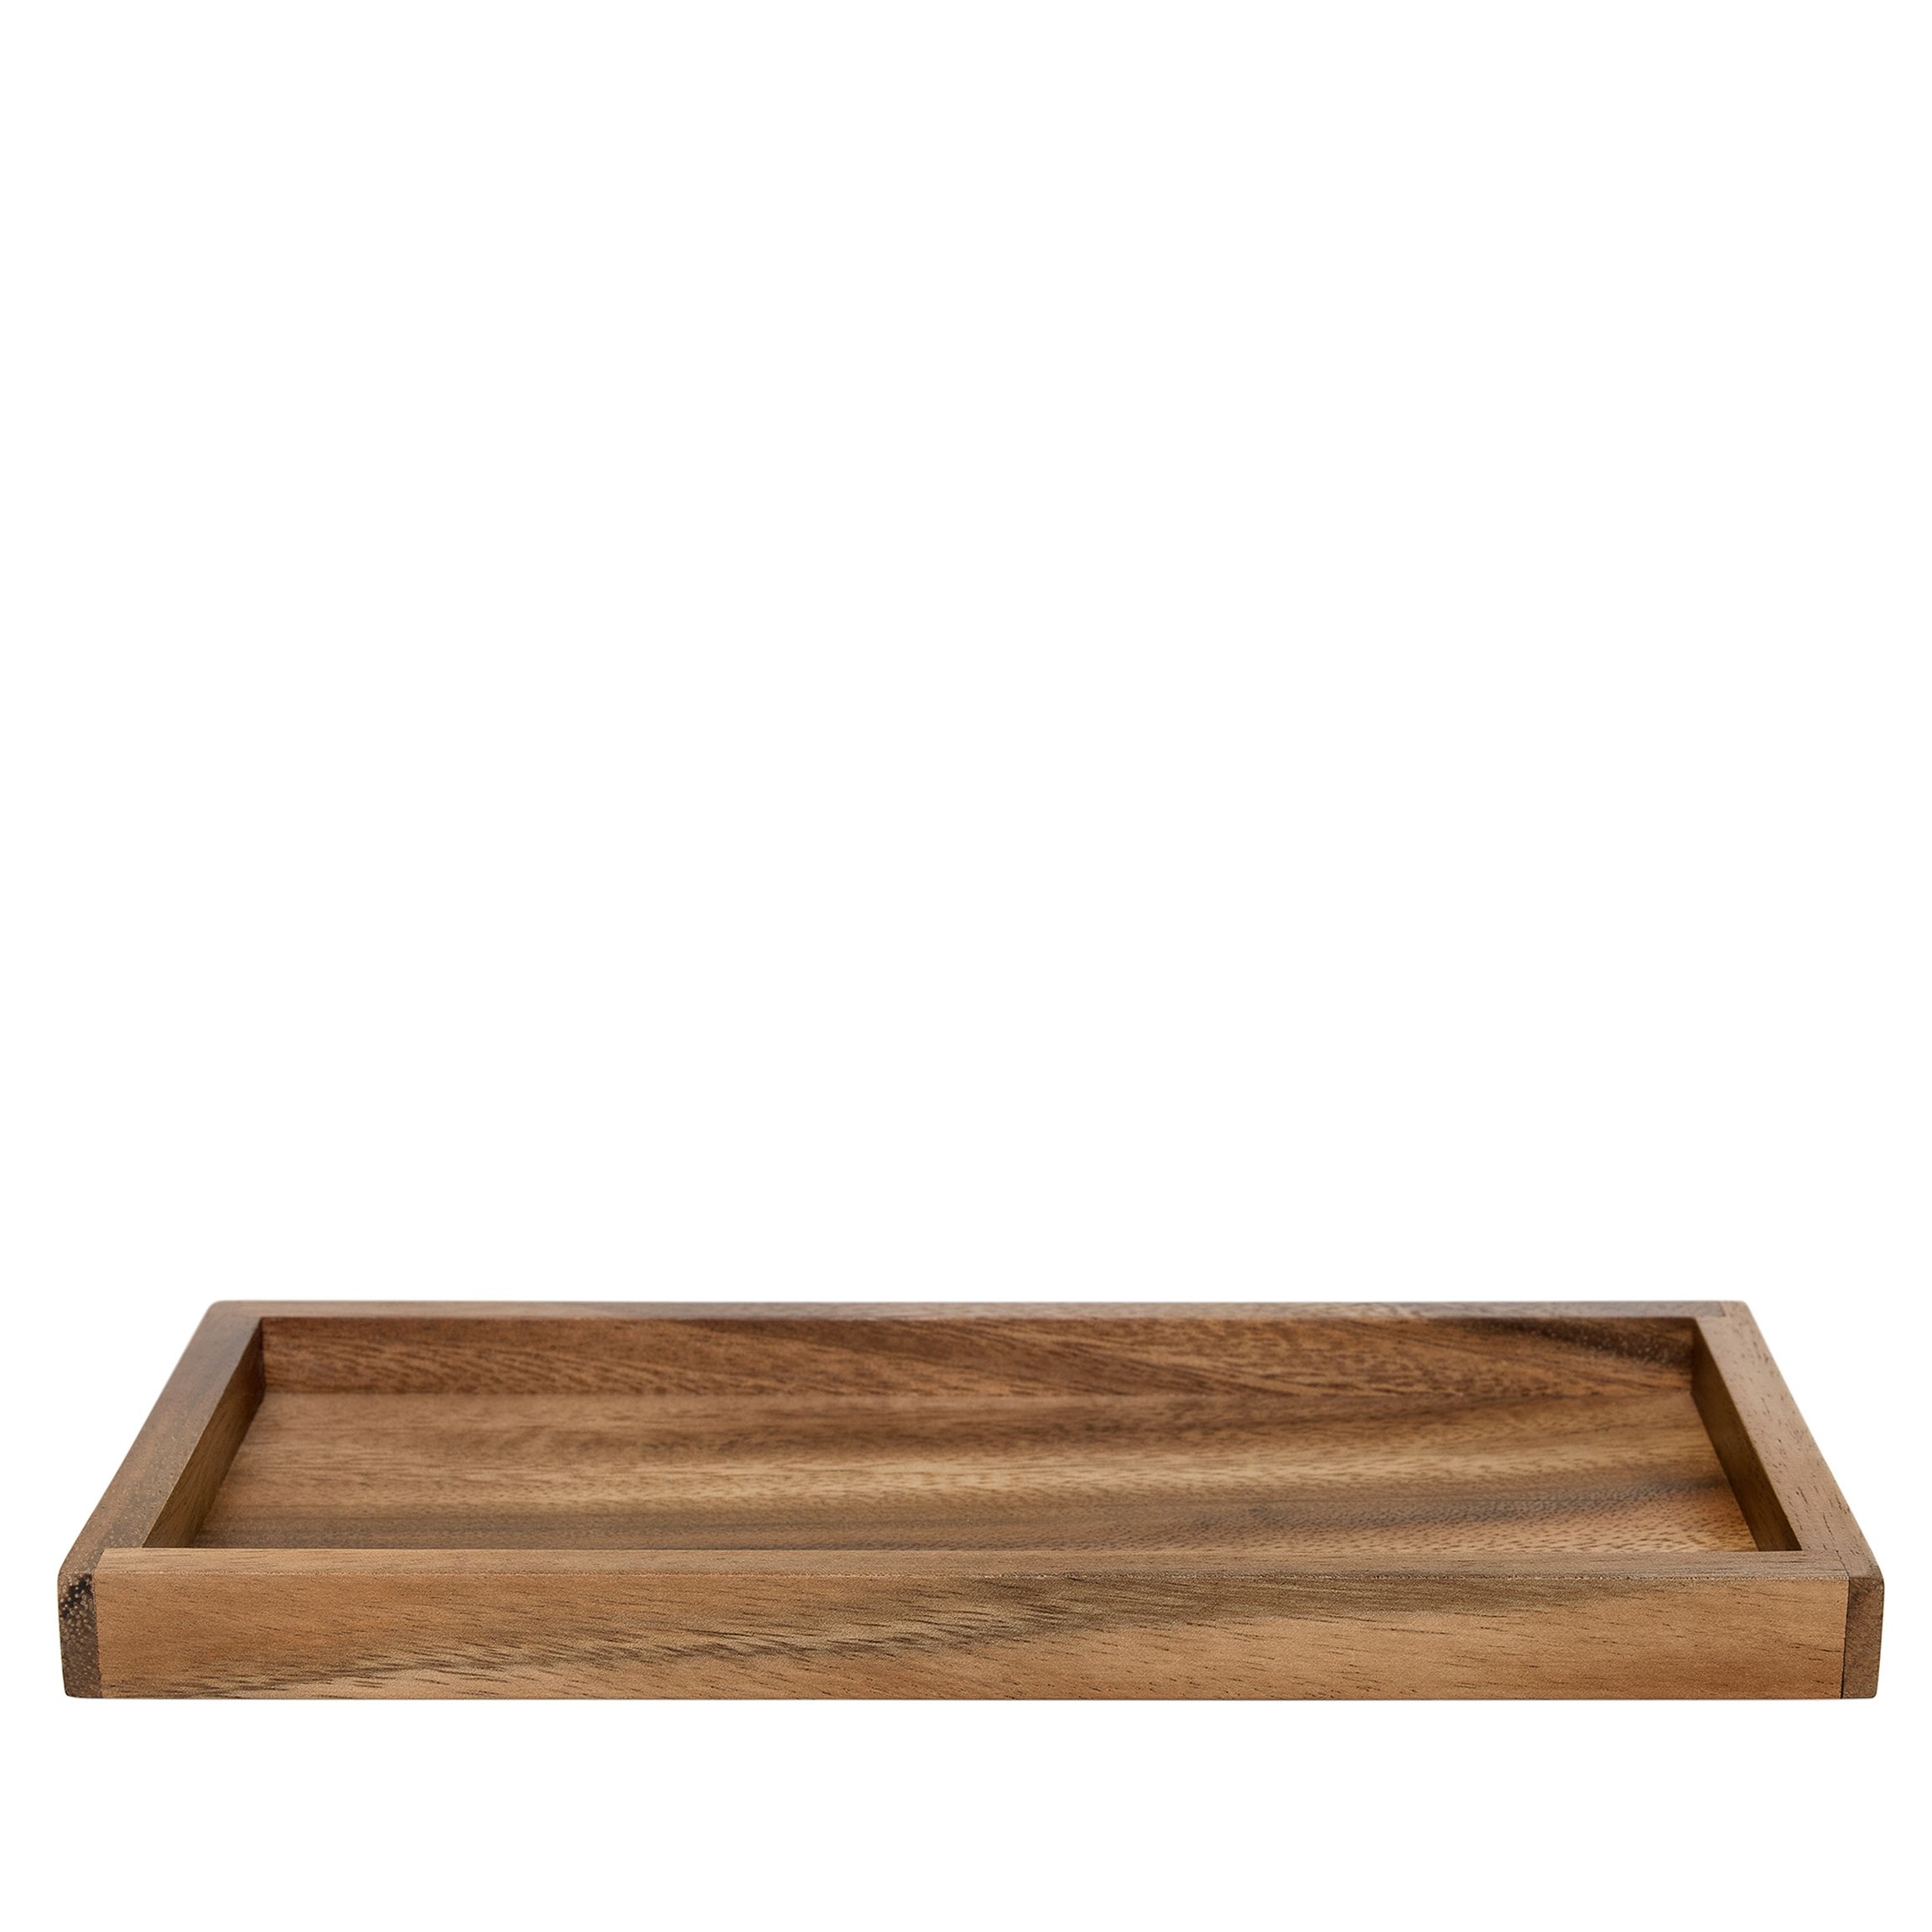 Decorative tray made of teak - Photo 2